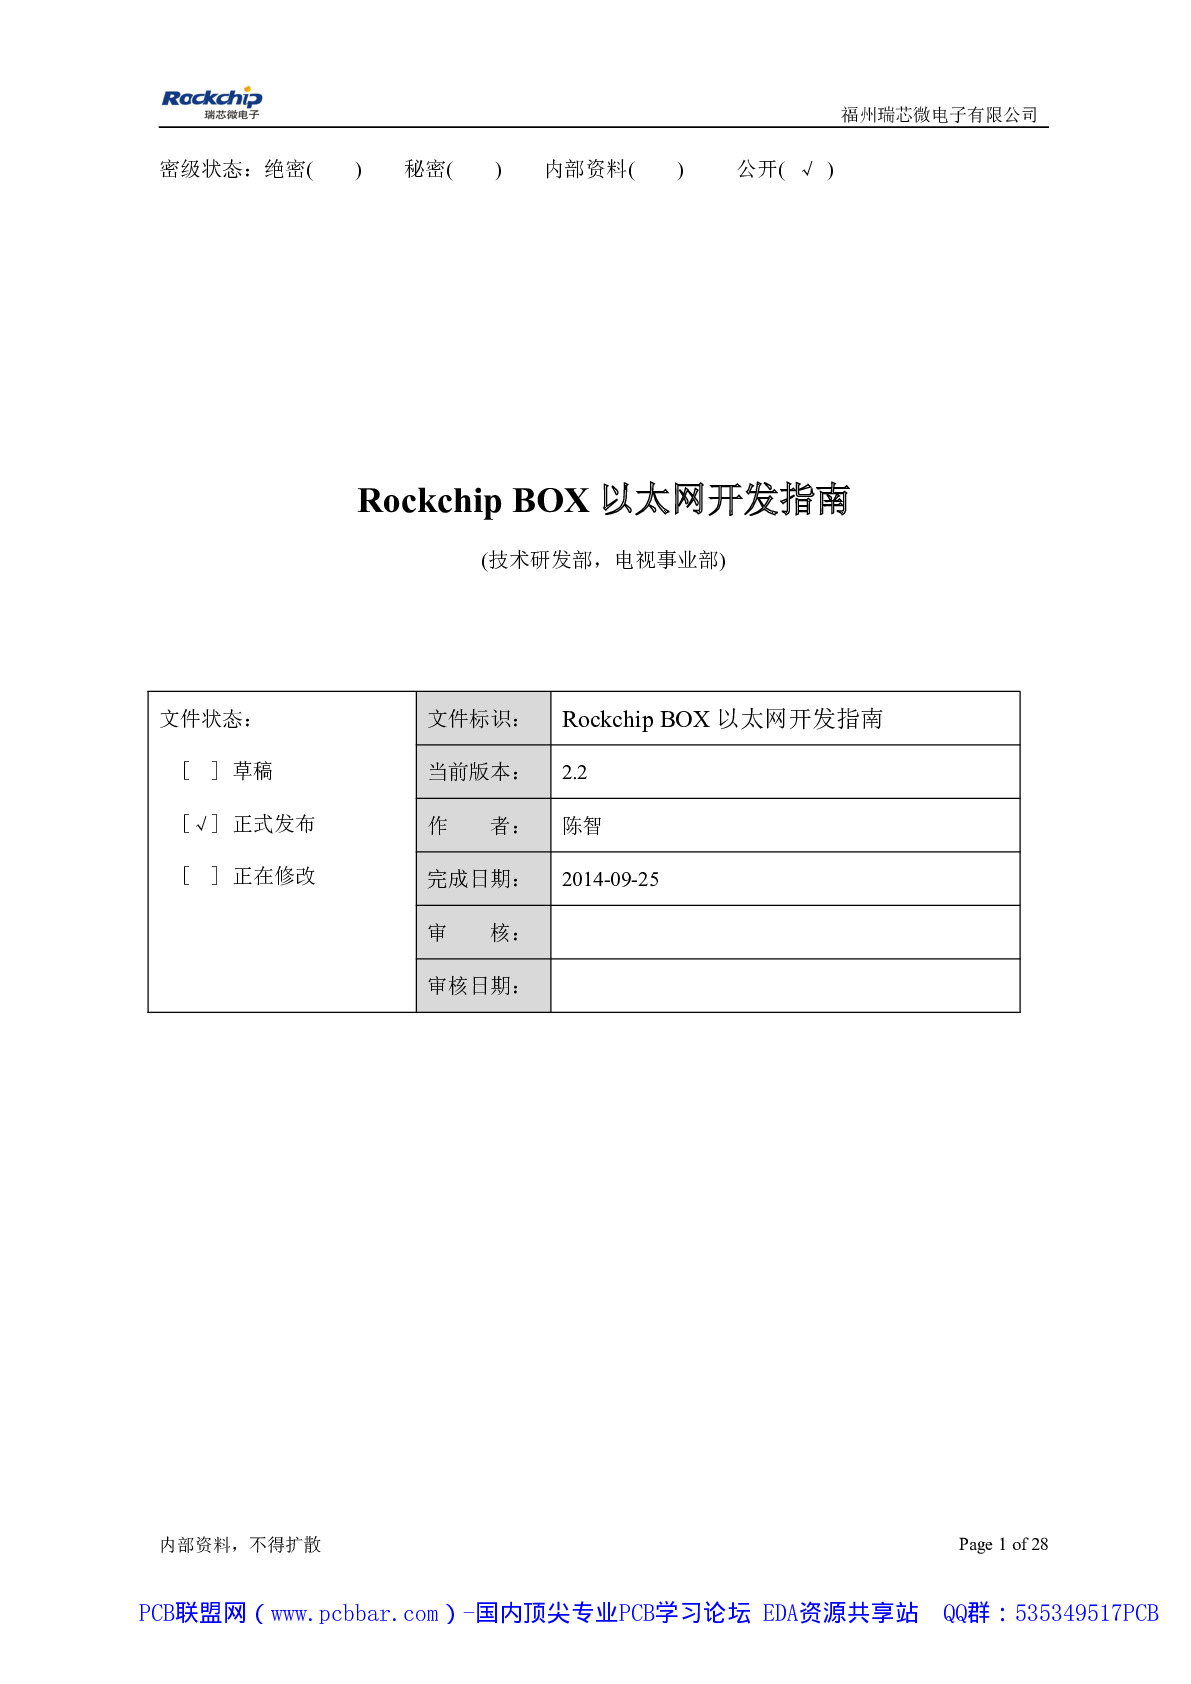 Rockchip-BOX-以太网开发指南-v2.2